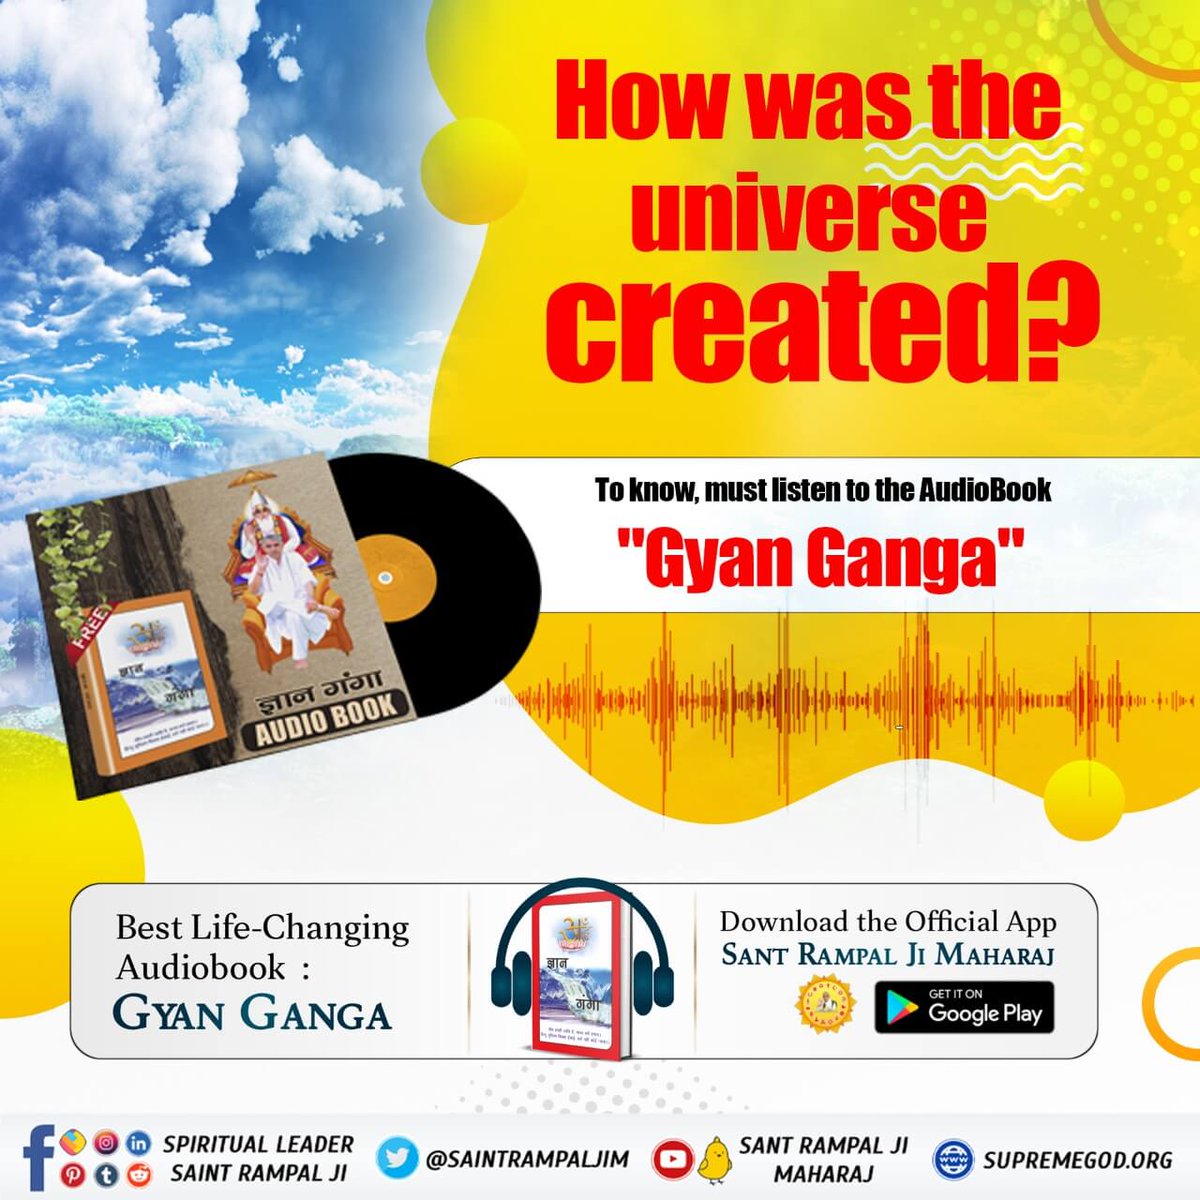 #GyanGanga_AudioBook
How was the universe created?
To know,get free sacred book 'Gyan Ganga'.